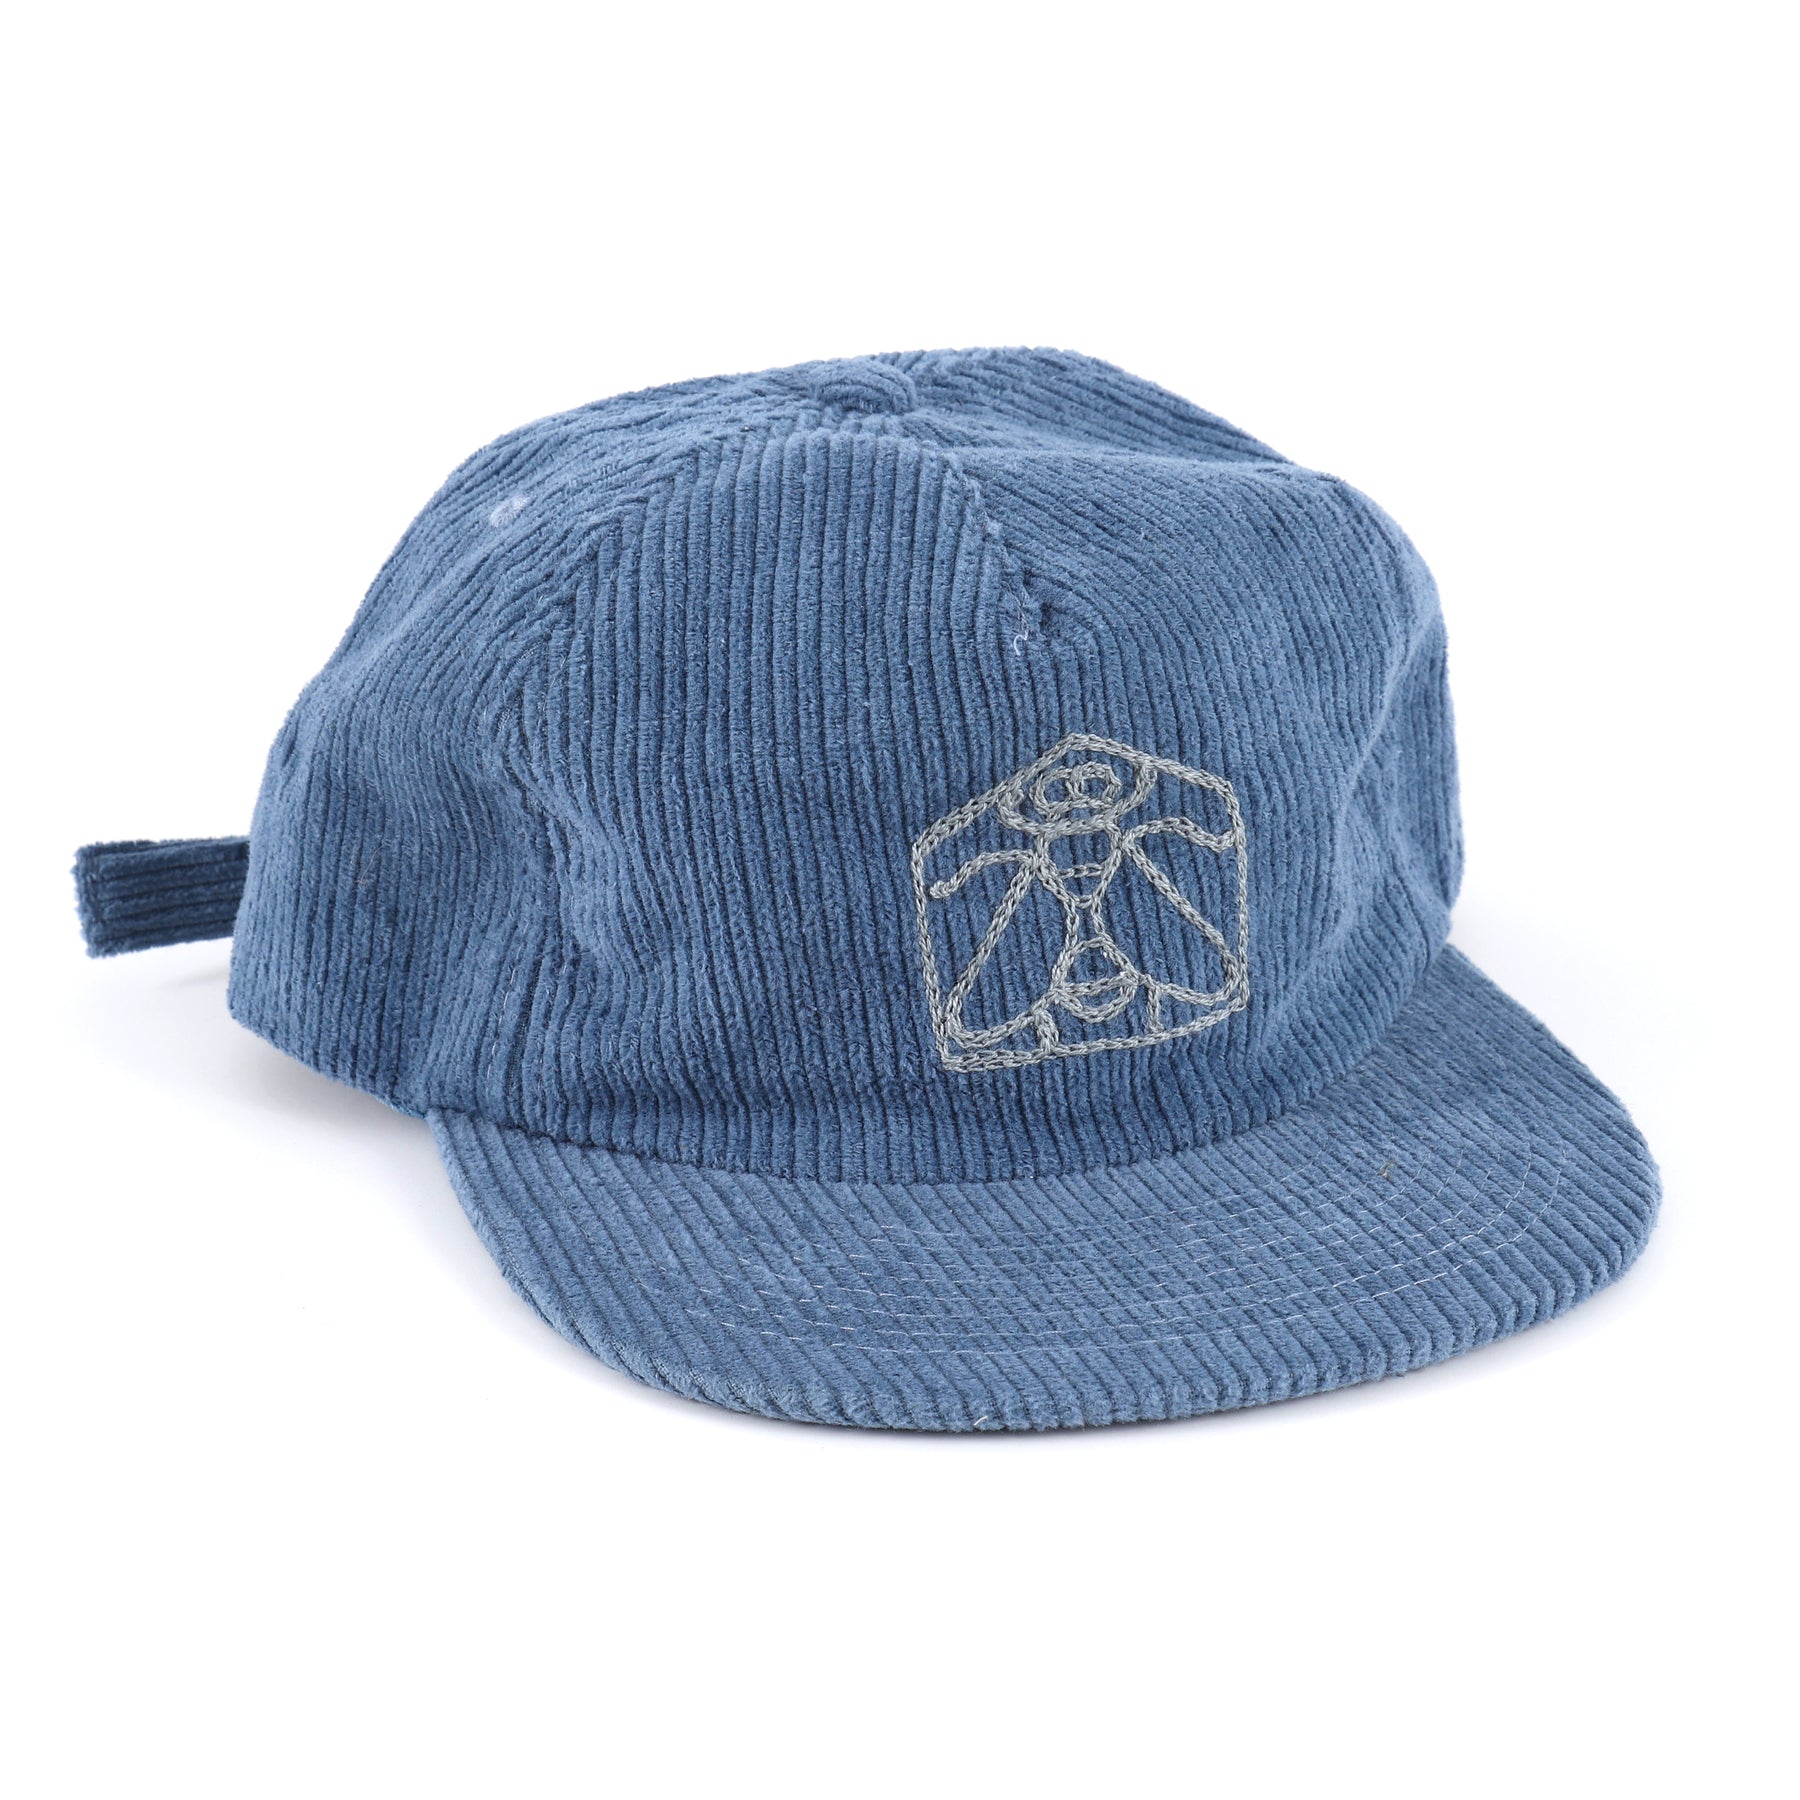 Pumpkinseed Chainstitch Embroidered Hat - Logo Blue